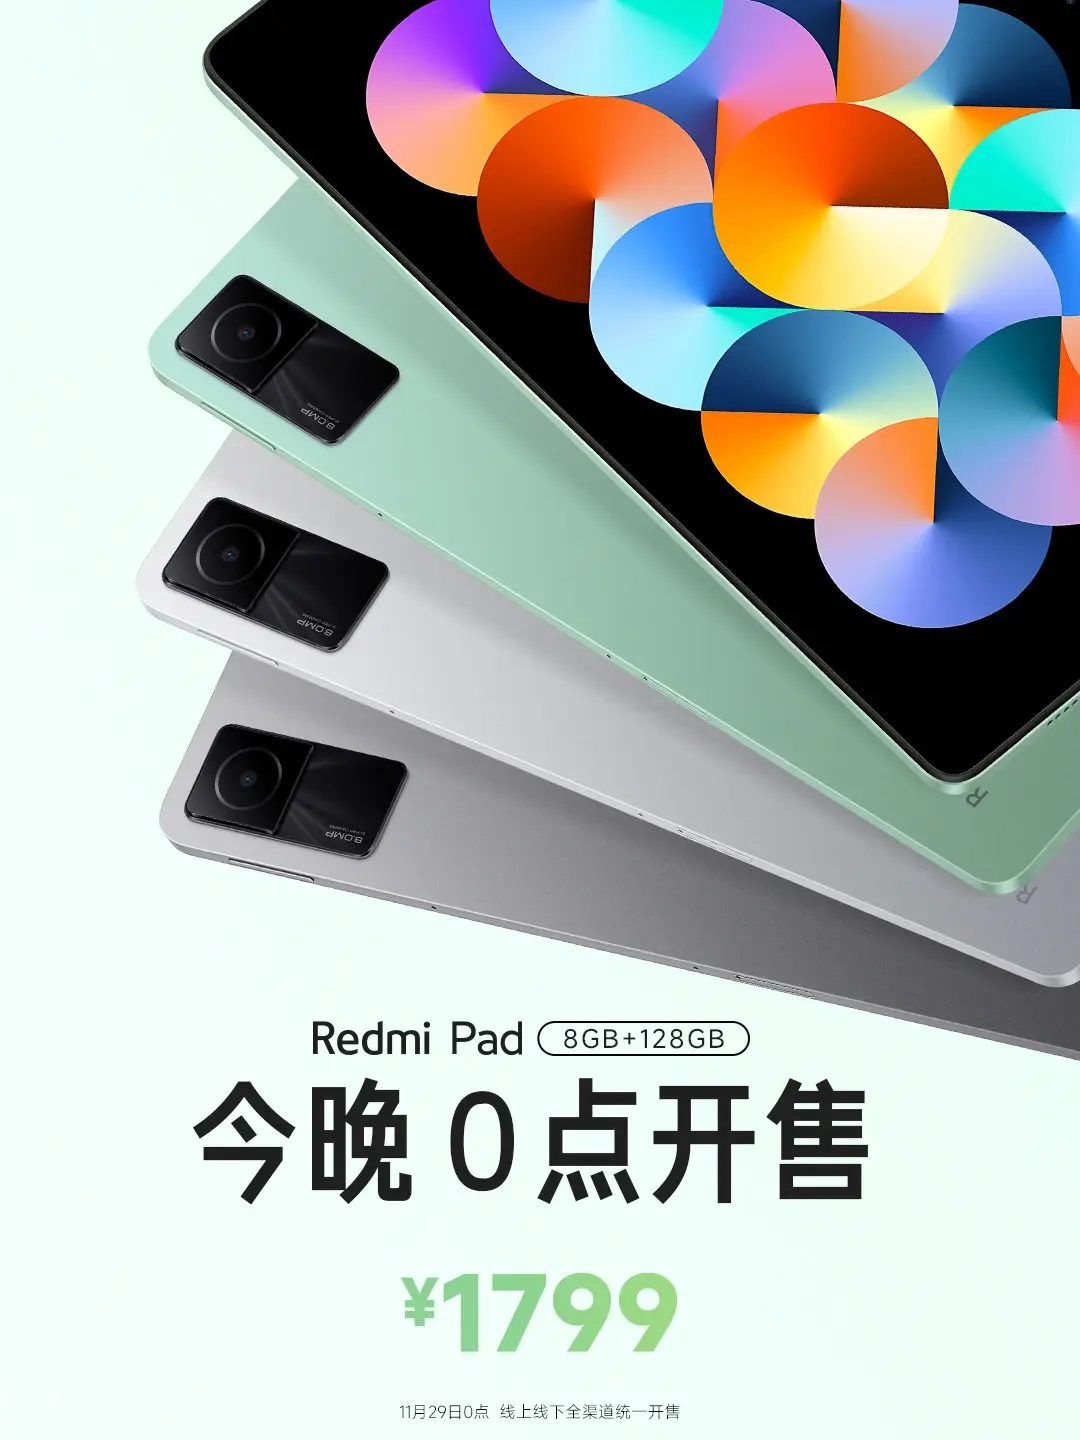 Xiaomi Pad 6 launch is closer - new leak reveals 